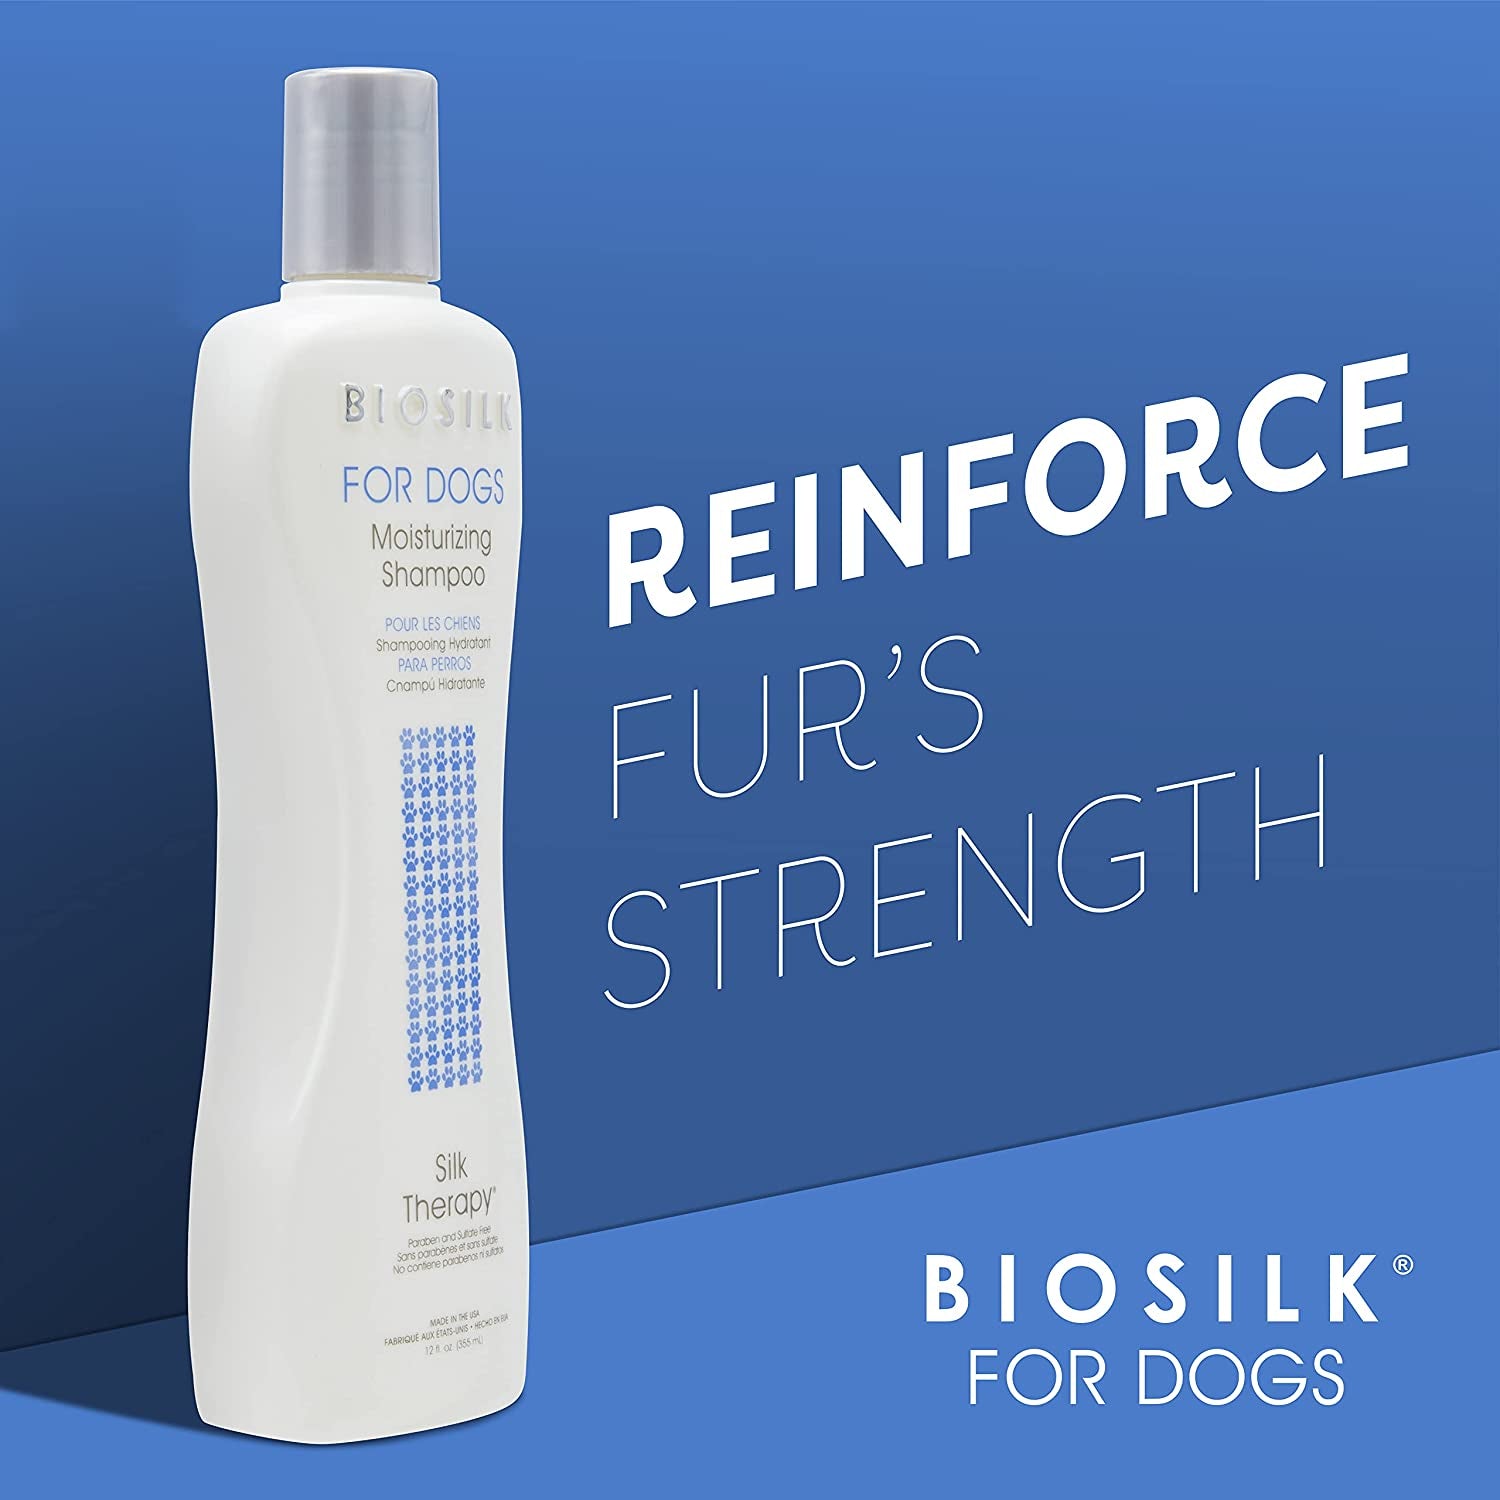 Biosilk for Dogs Silk Therapy Moisturizing Shampoo | Best Moisturizing Shampoo for All Dogs and Dogs with Dry, Itchy, or Sensitive Skin | 12 Oz Dog Shampoo